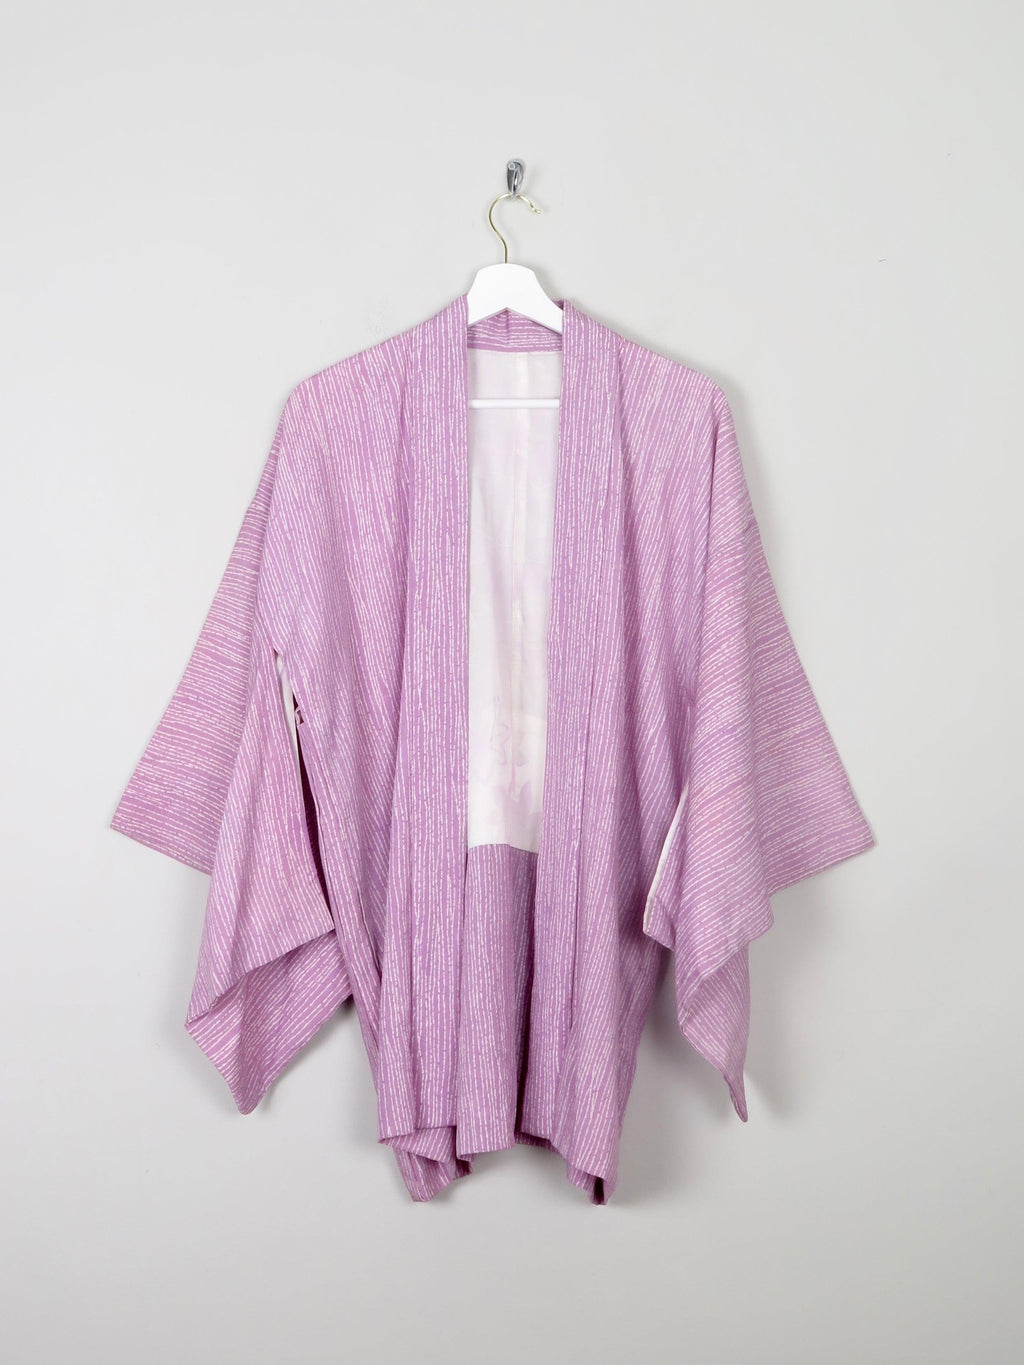 Vintage Pink Haori Kimono S/M - The Harlequin